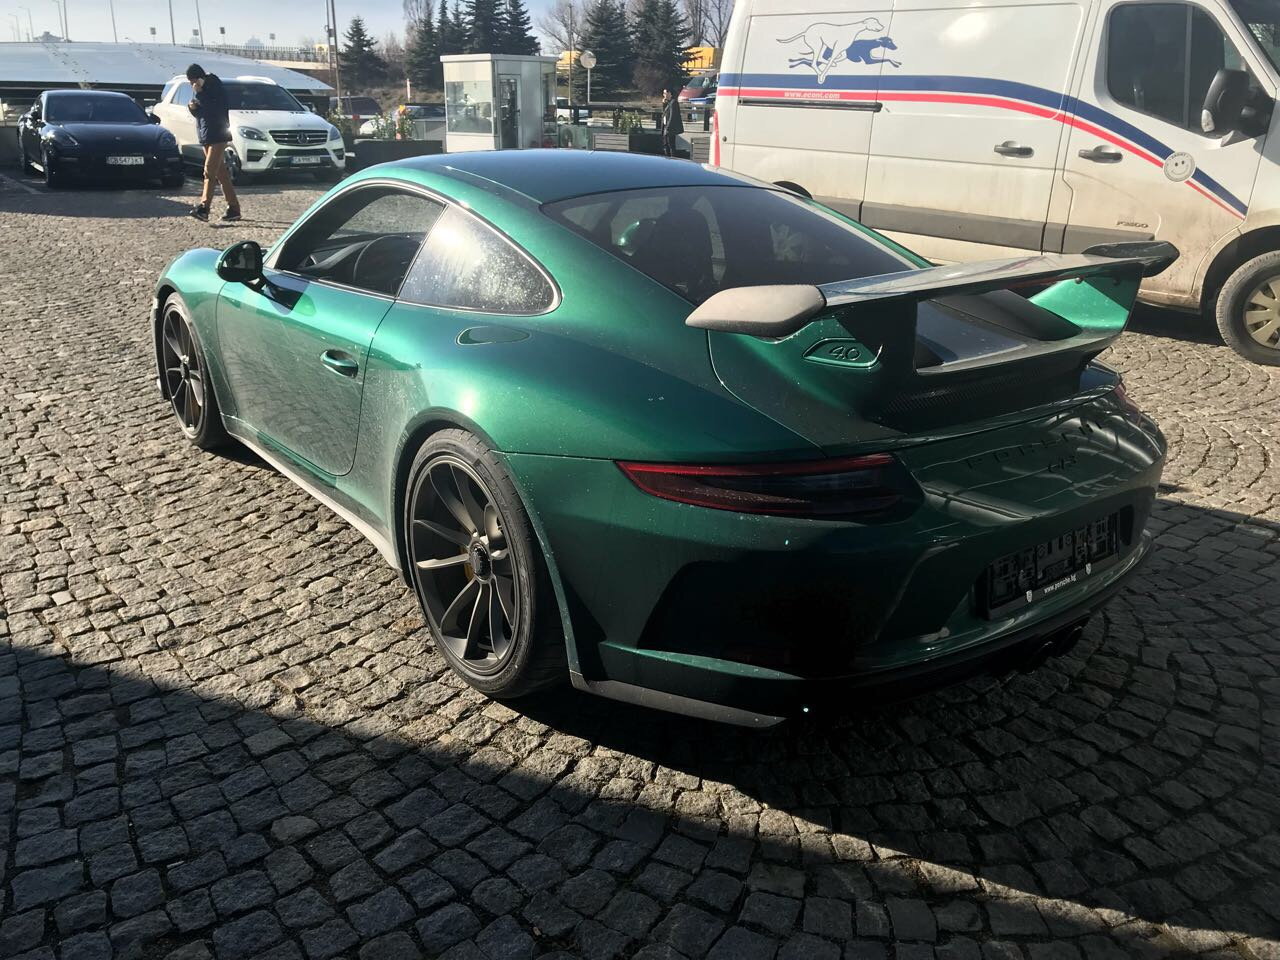 PTS GT3 Picture Thread - Page 5 - Rennlist - Porsche Discussion Forums